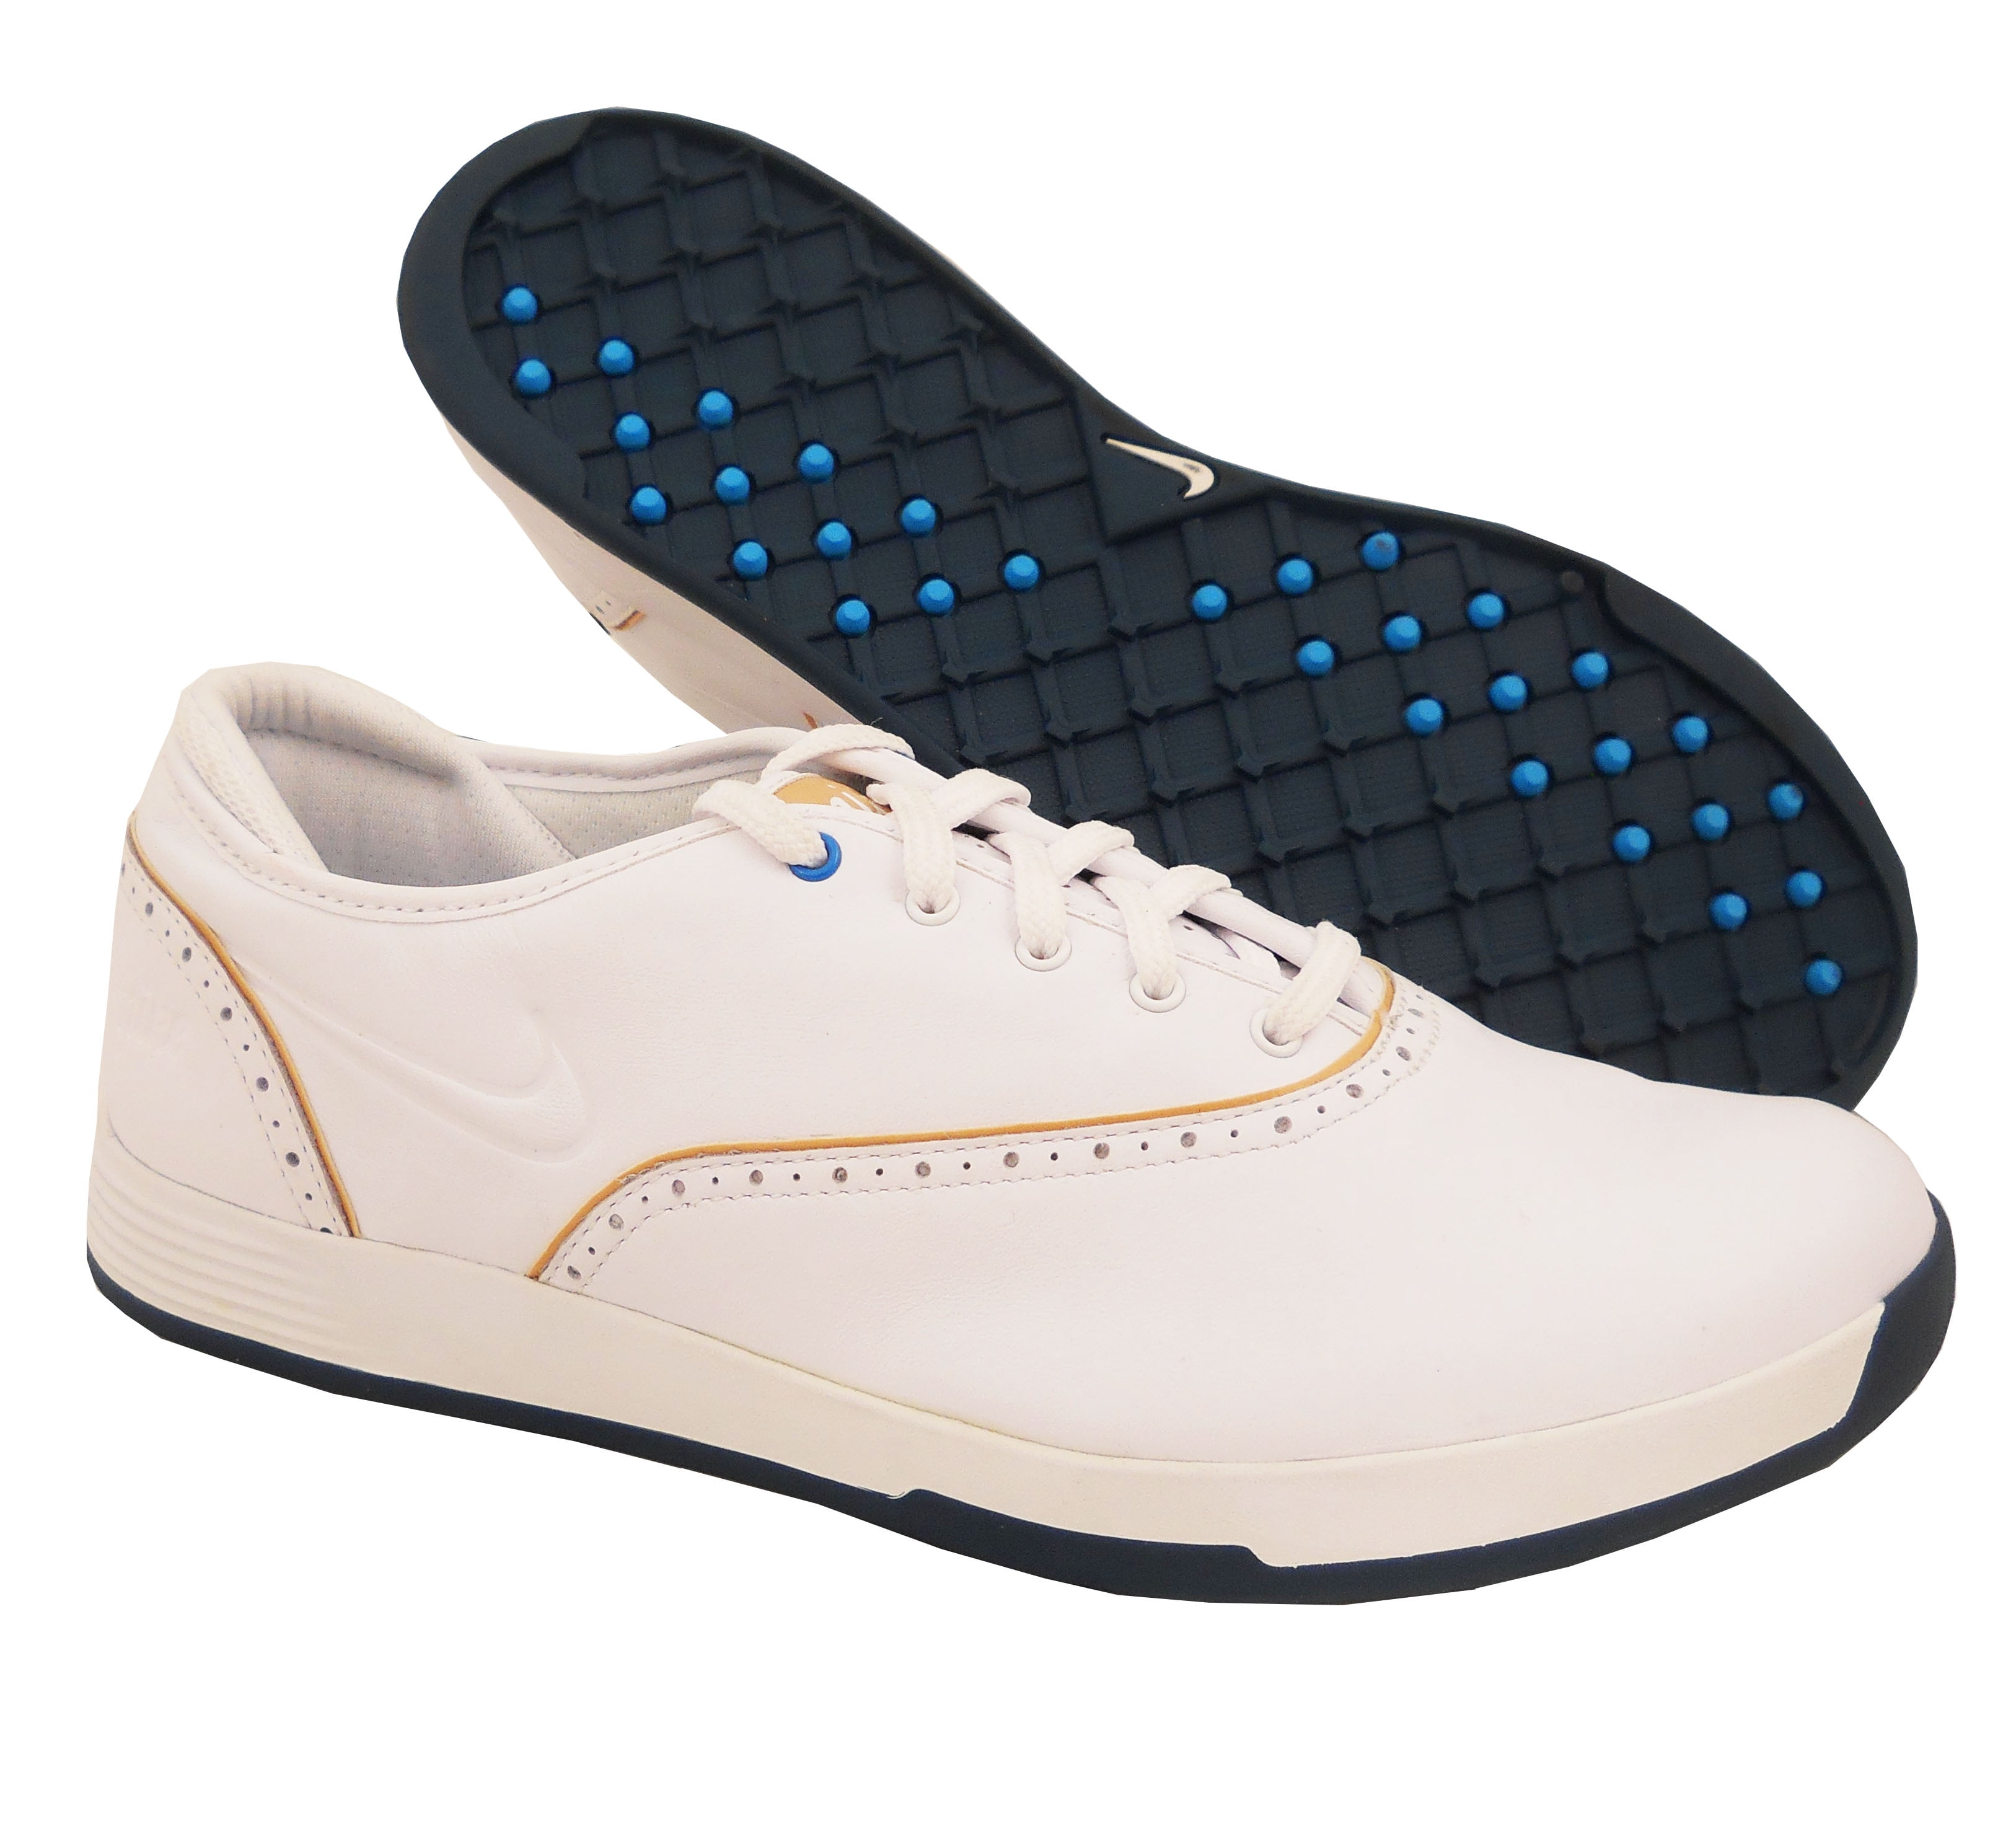 nike lunar duet classic golf shoes womens